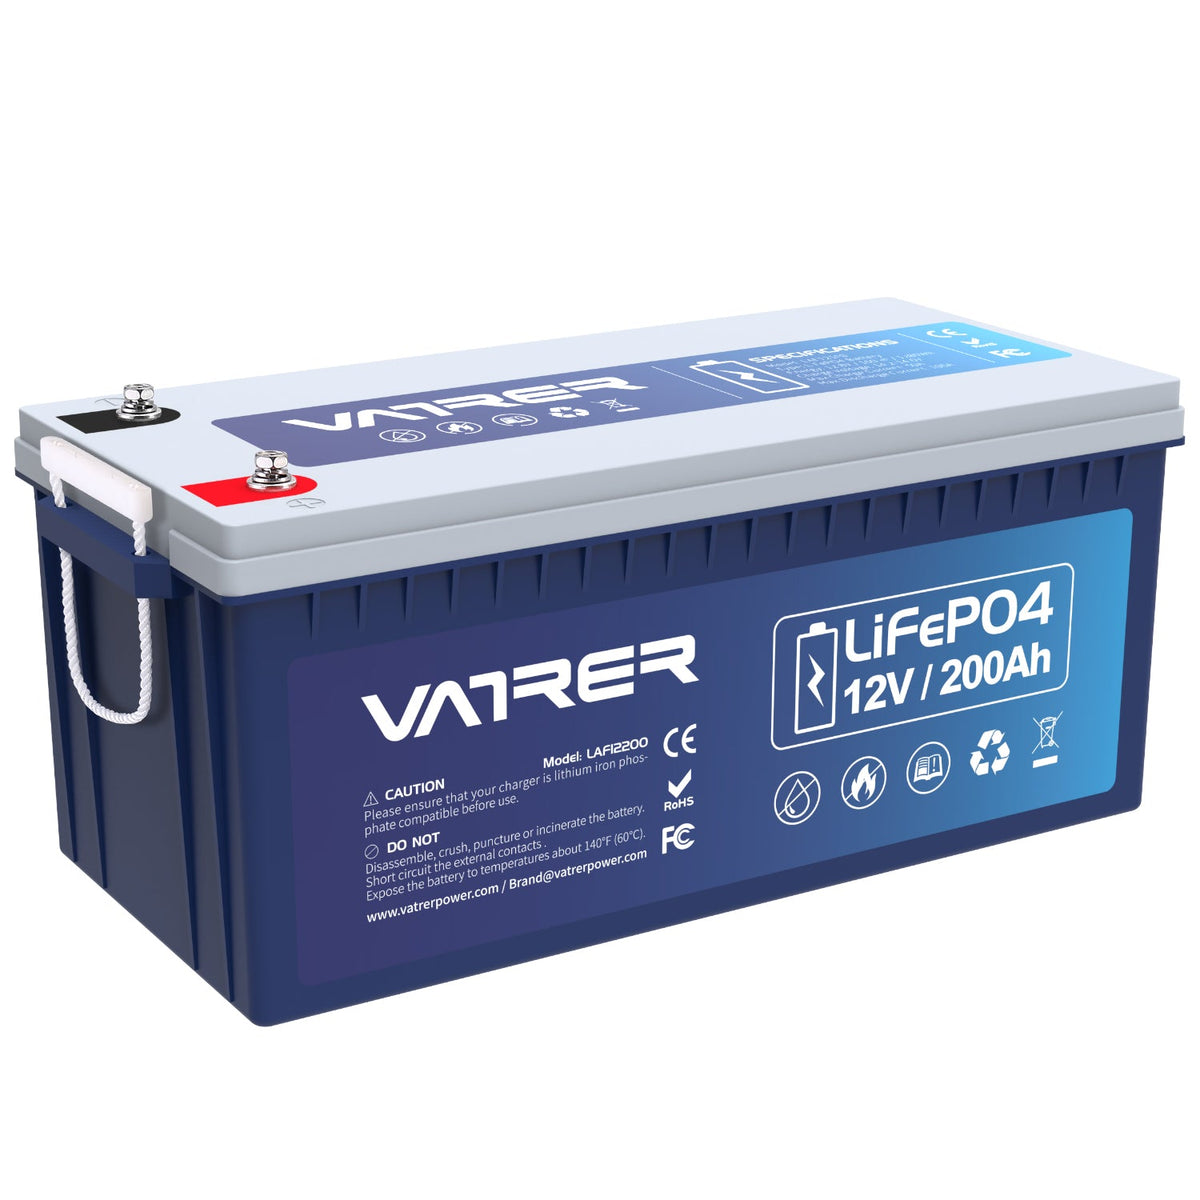 Vatler 12V 200Ah LiFePO4 リチウム電池、内蔵 200A BMS および低温カットオフ LiFePO4 電池 11